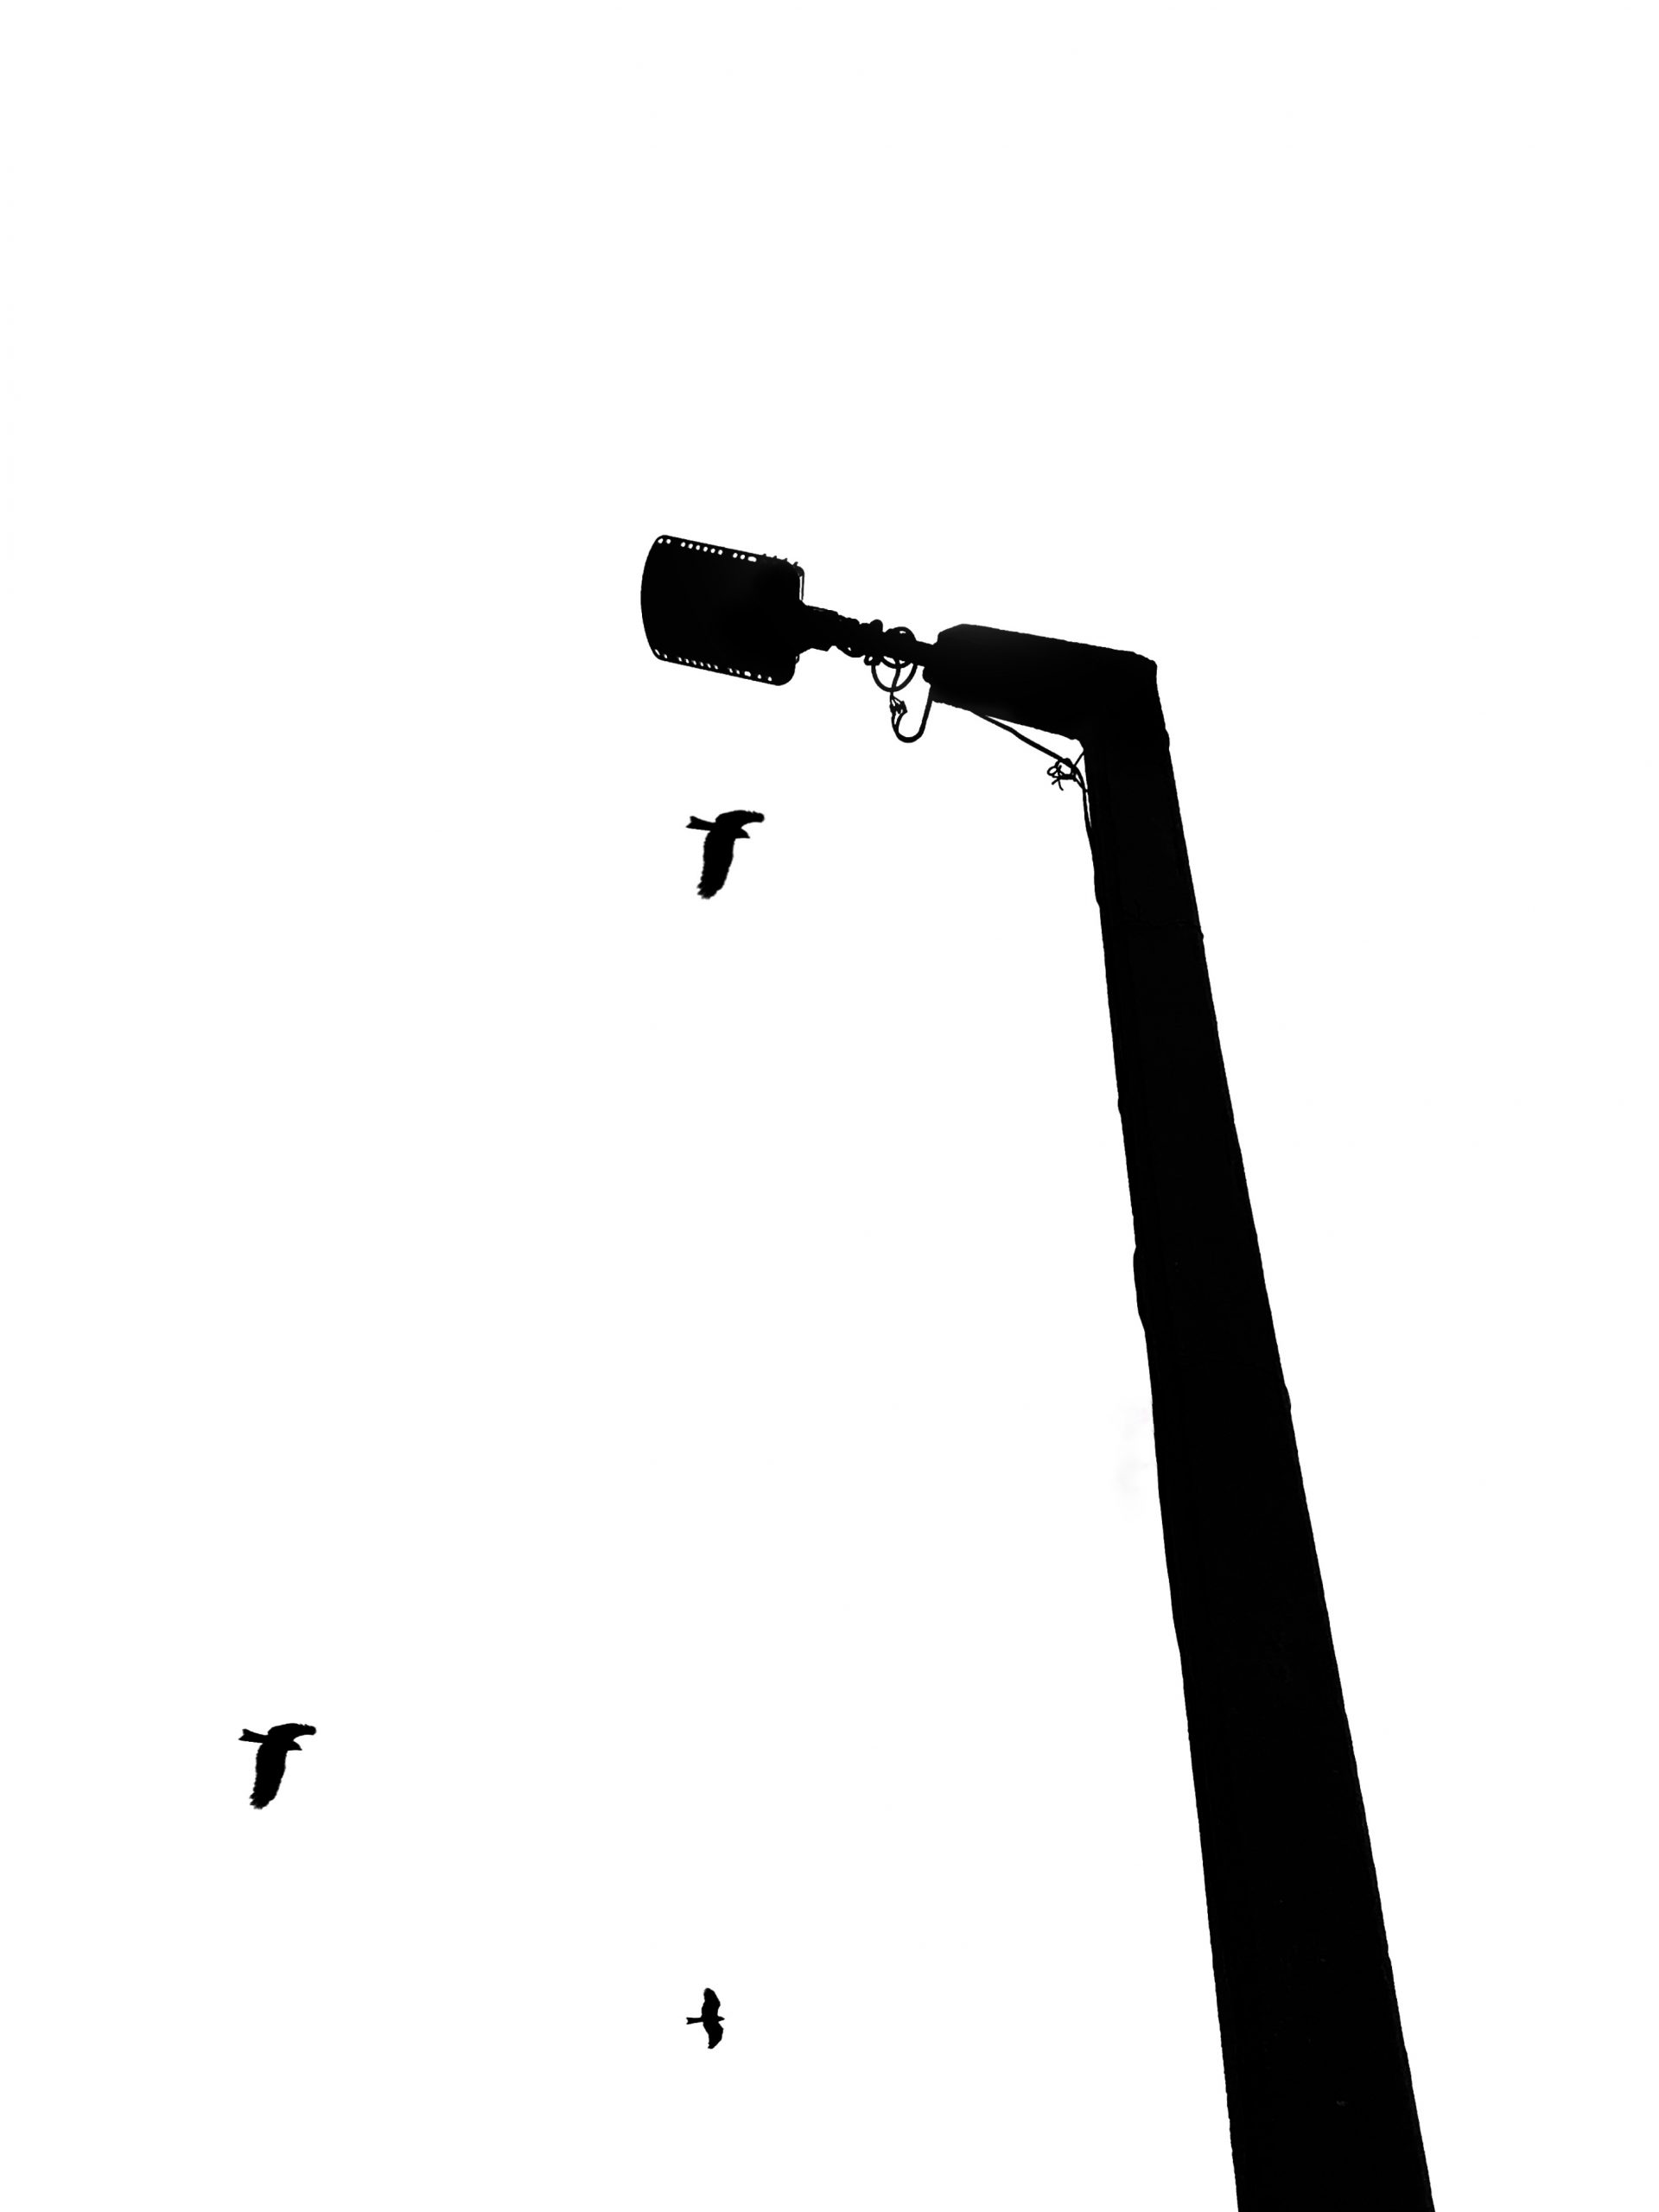 A light pole